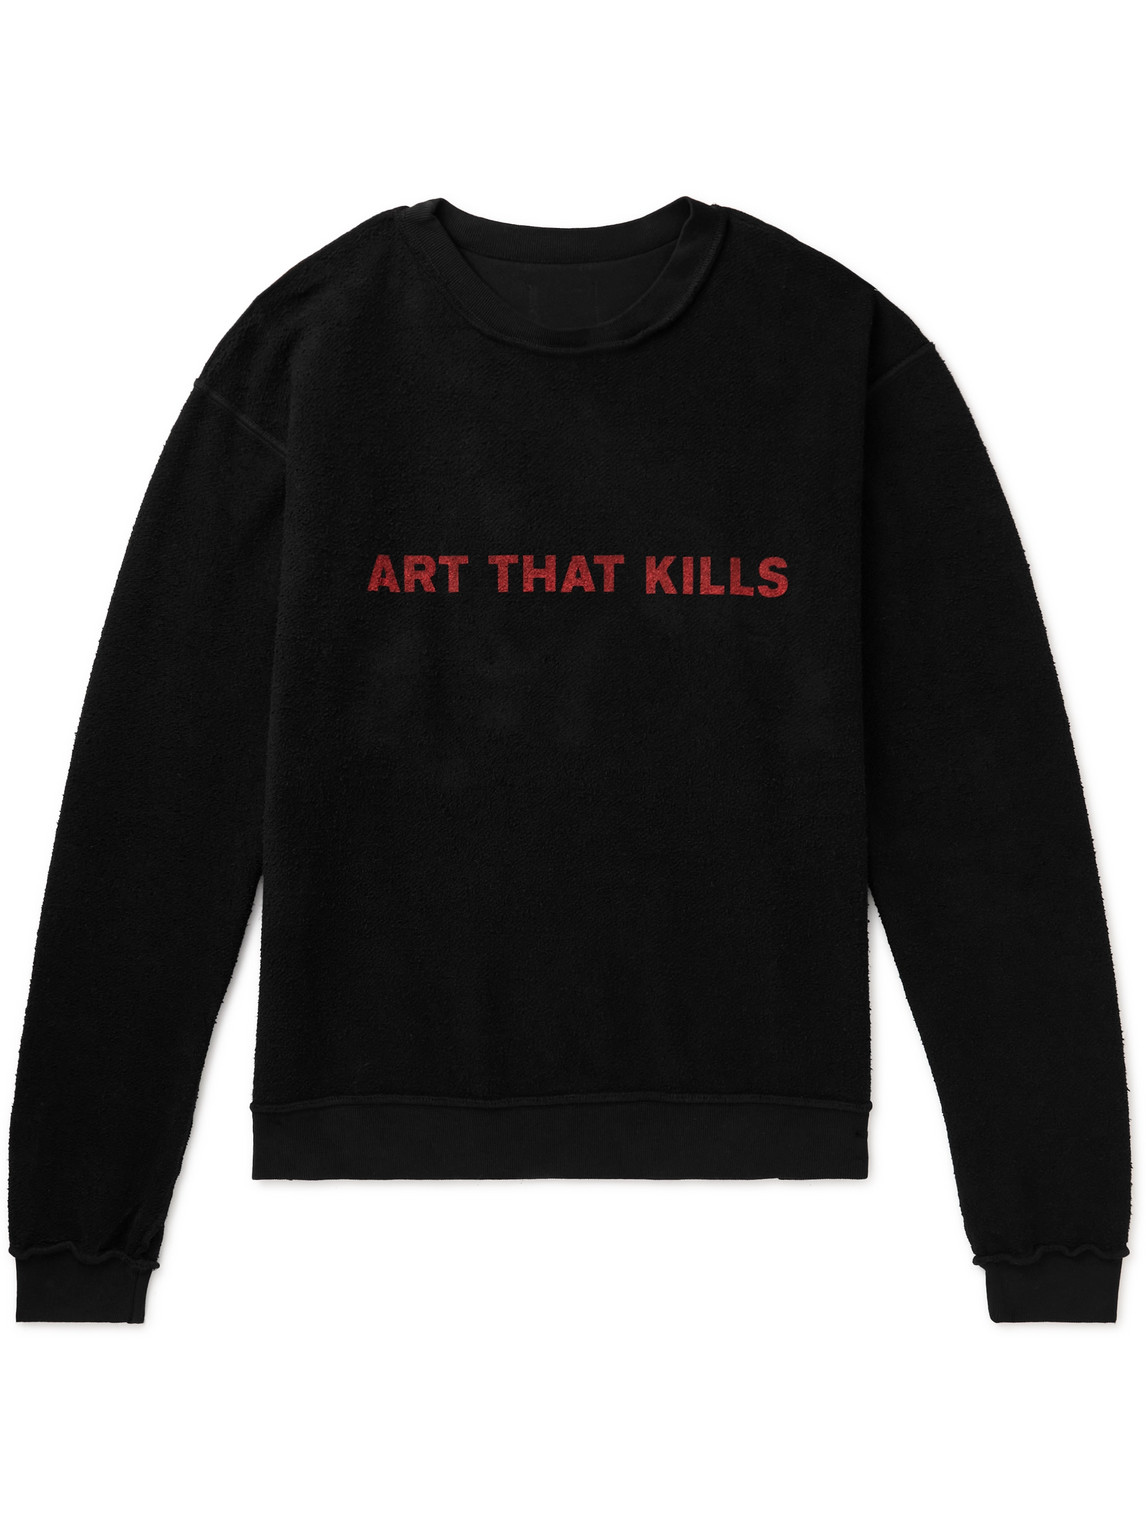 Gallery Dept. Reversible Sweatshirt With Print In Black